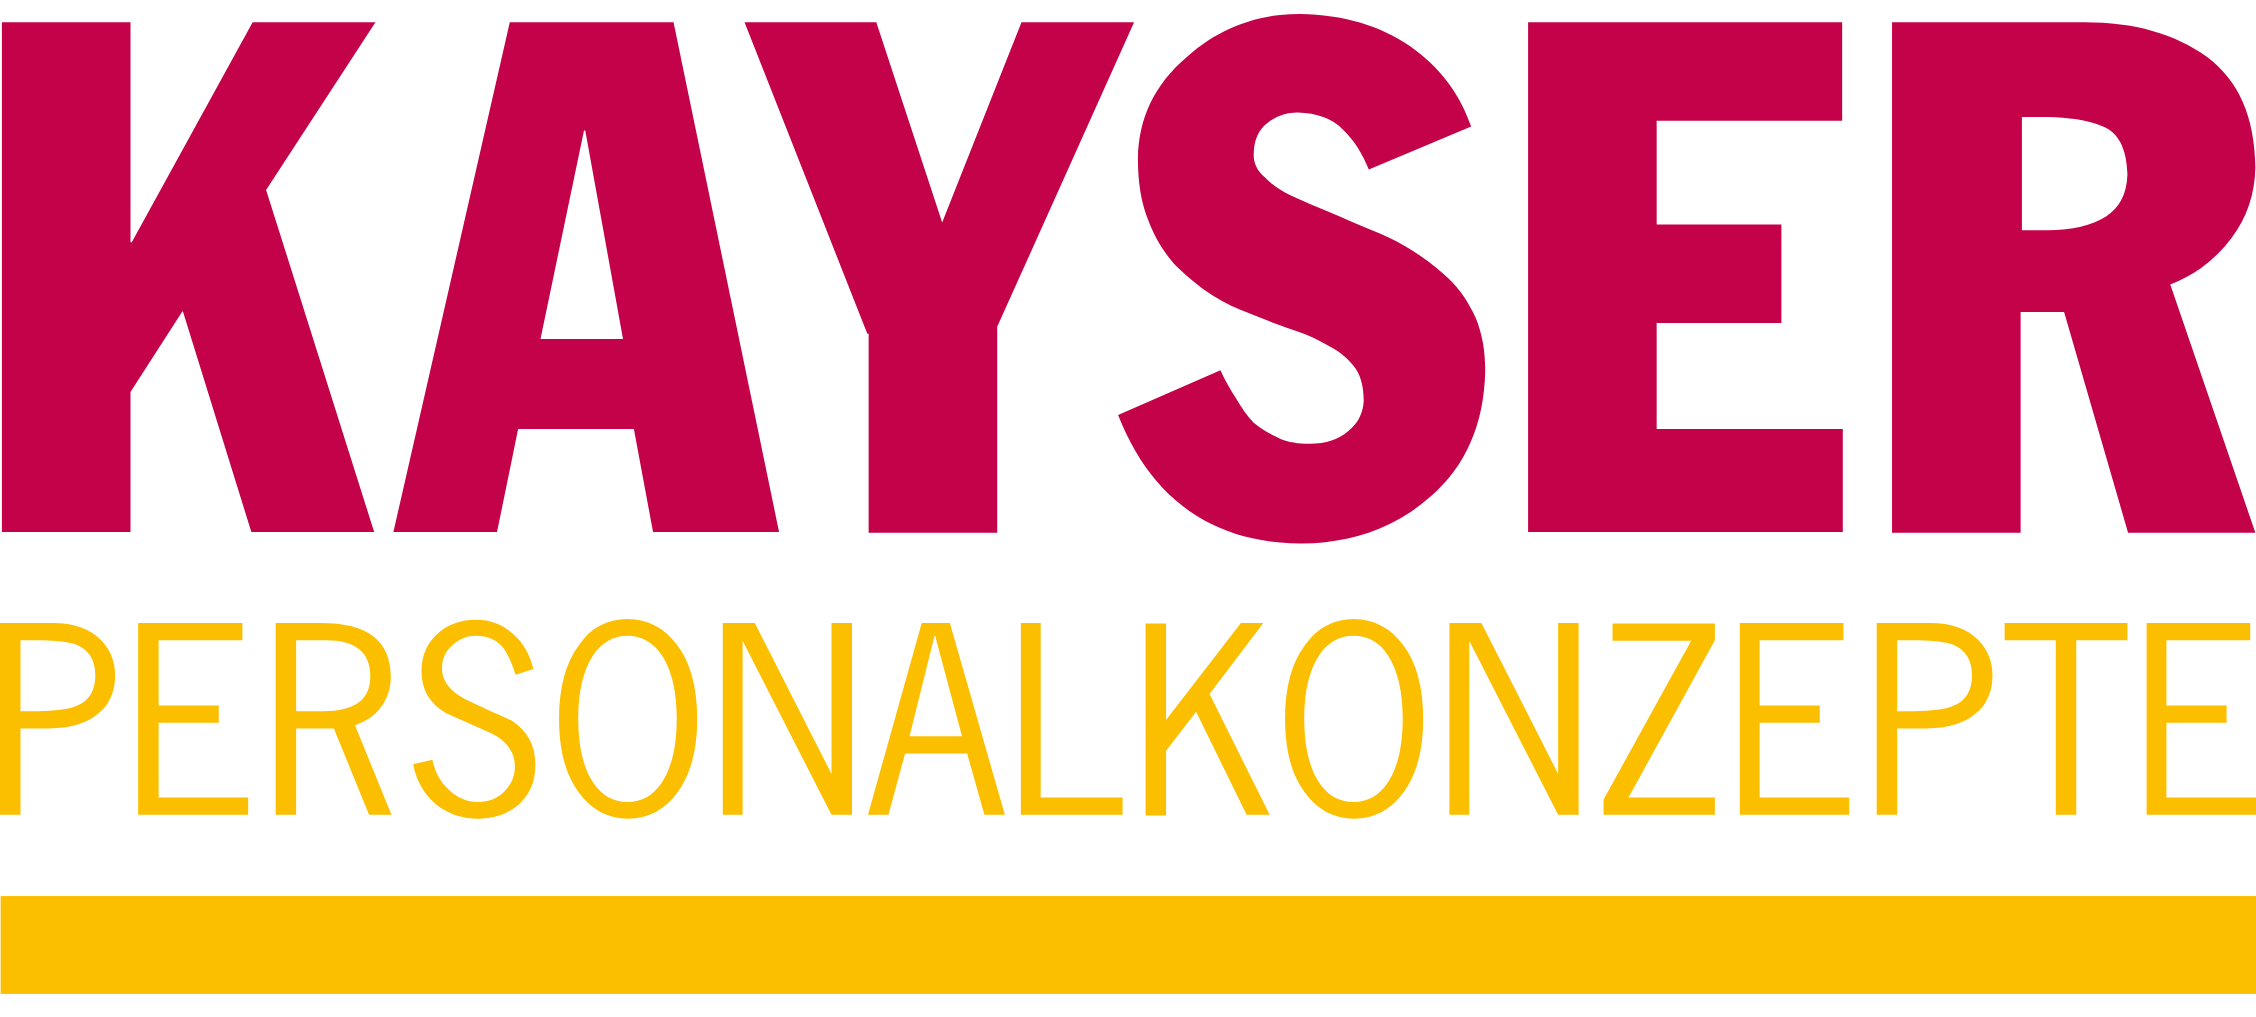 Kayser Personalkonzepte Logo